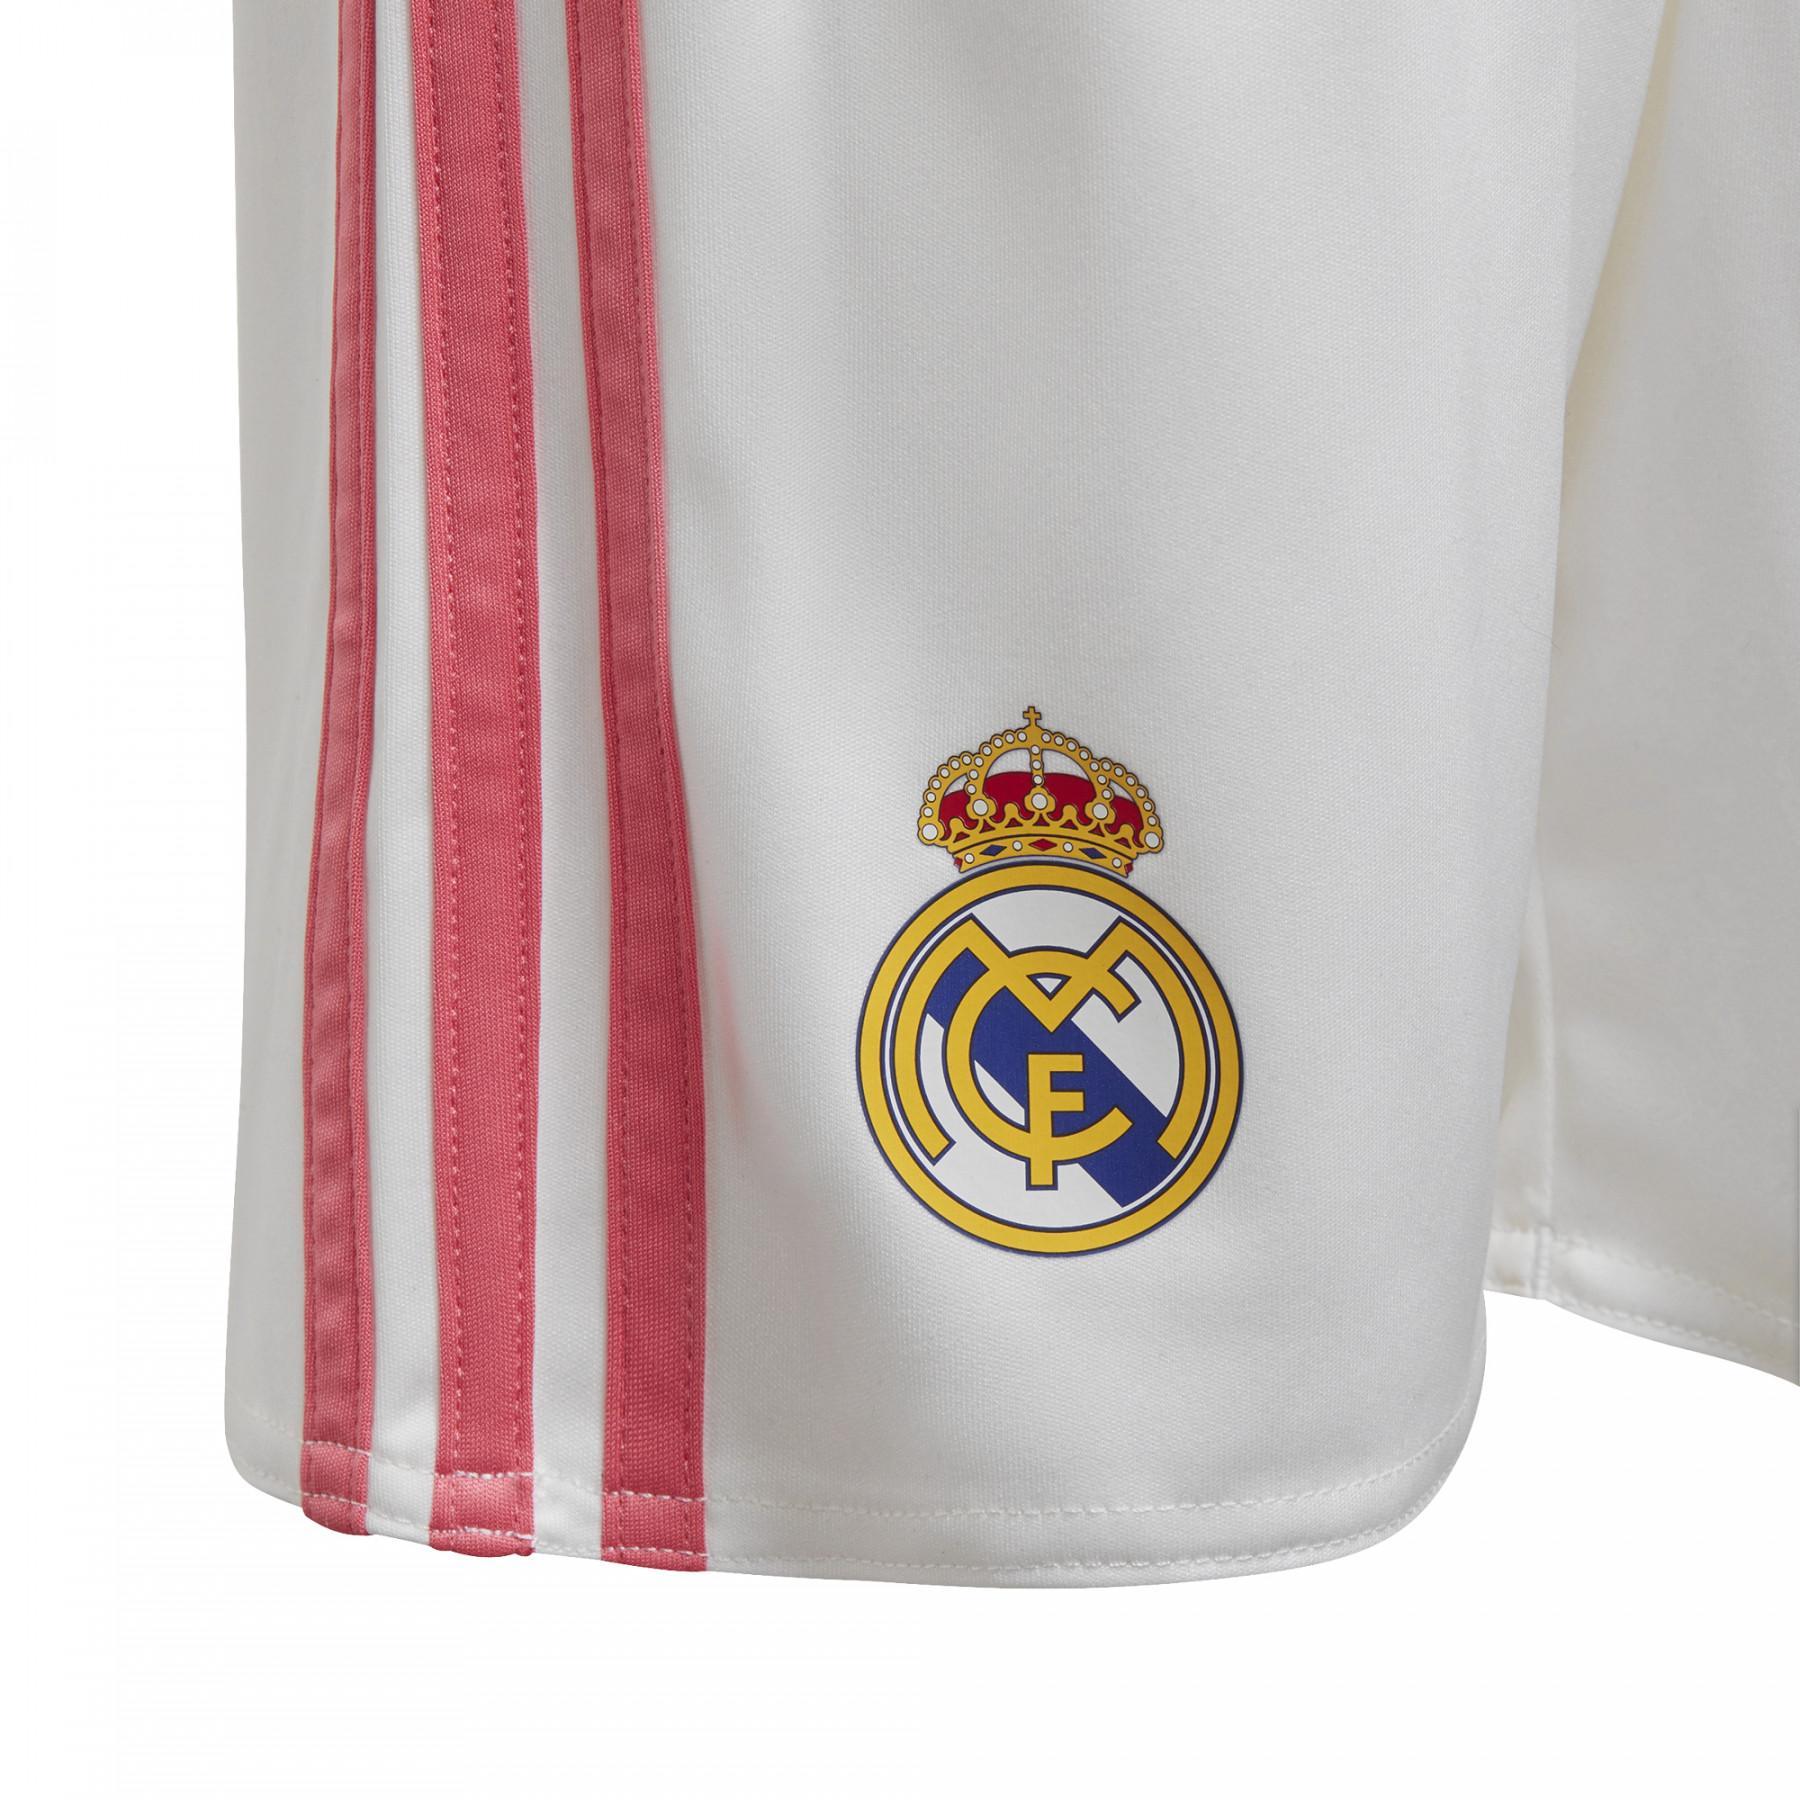 Hem mini-kit Real Madrid 2020/21